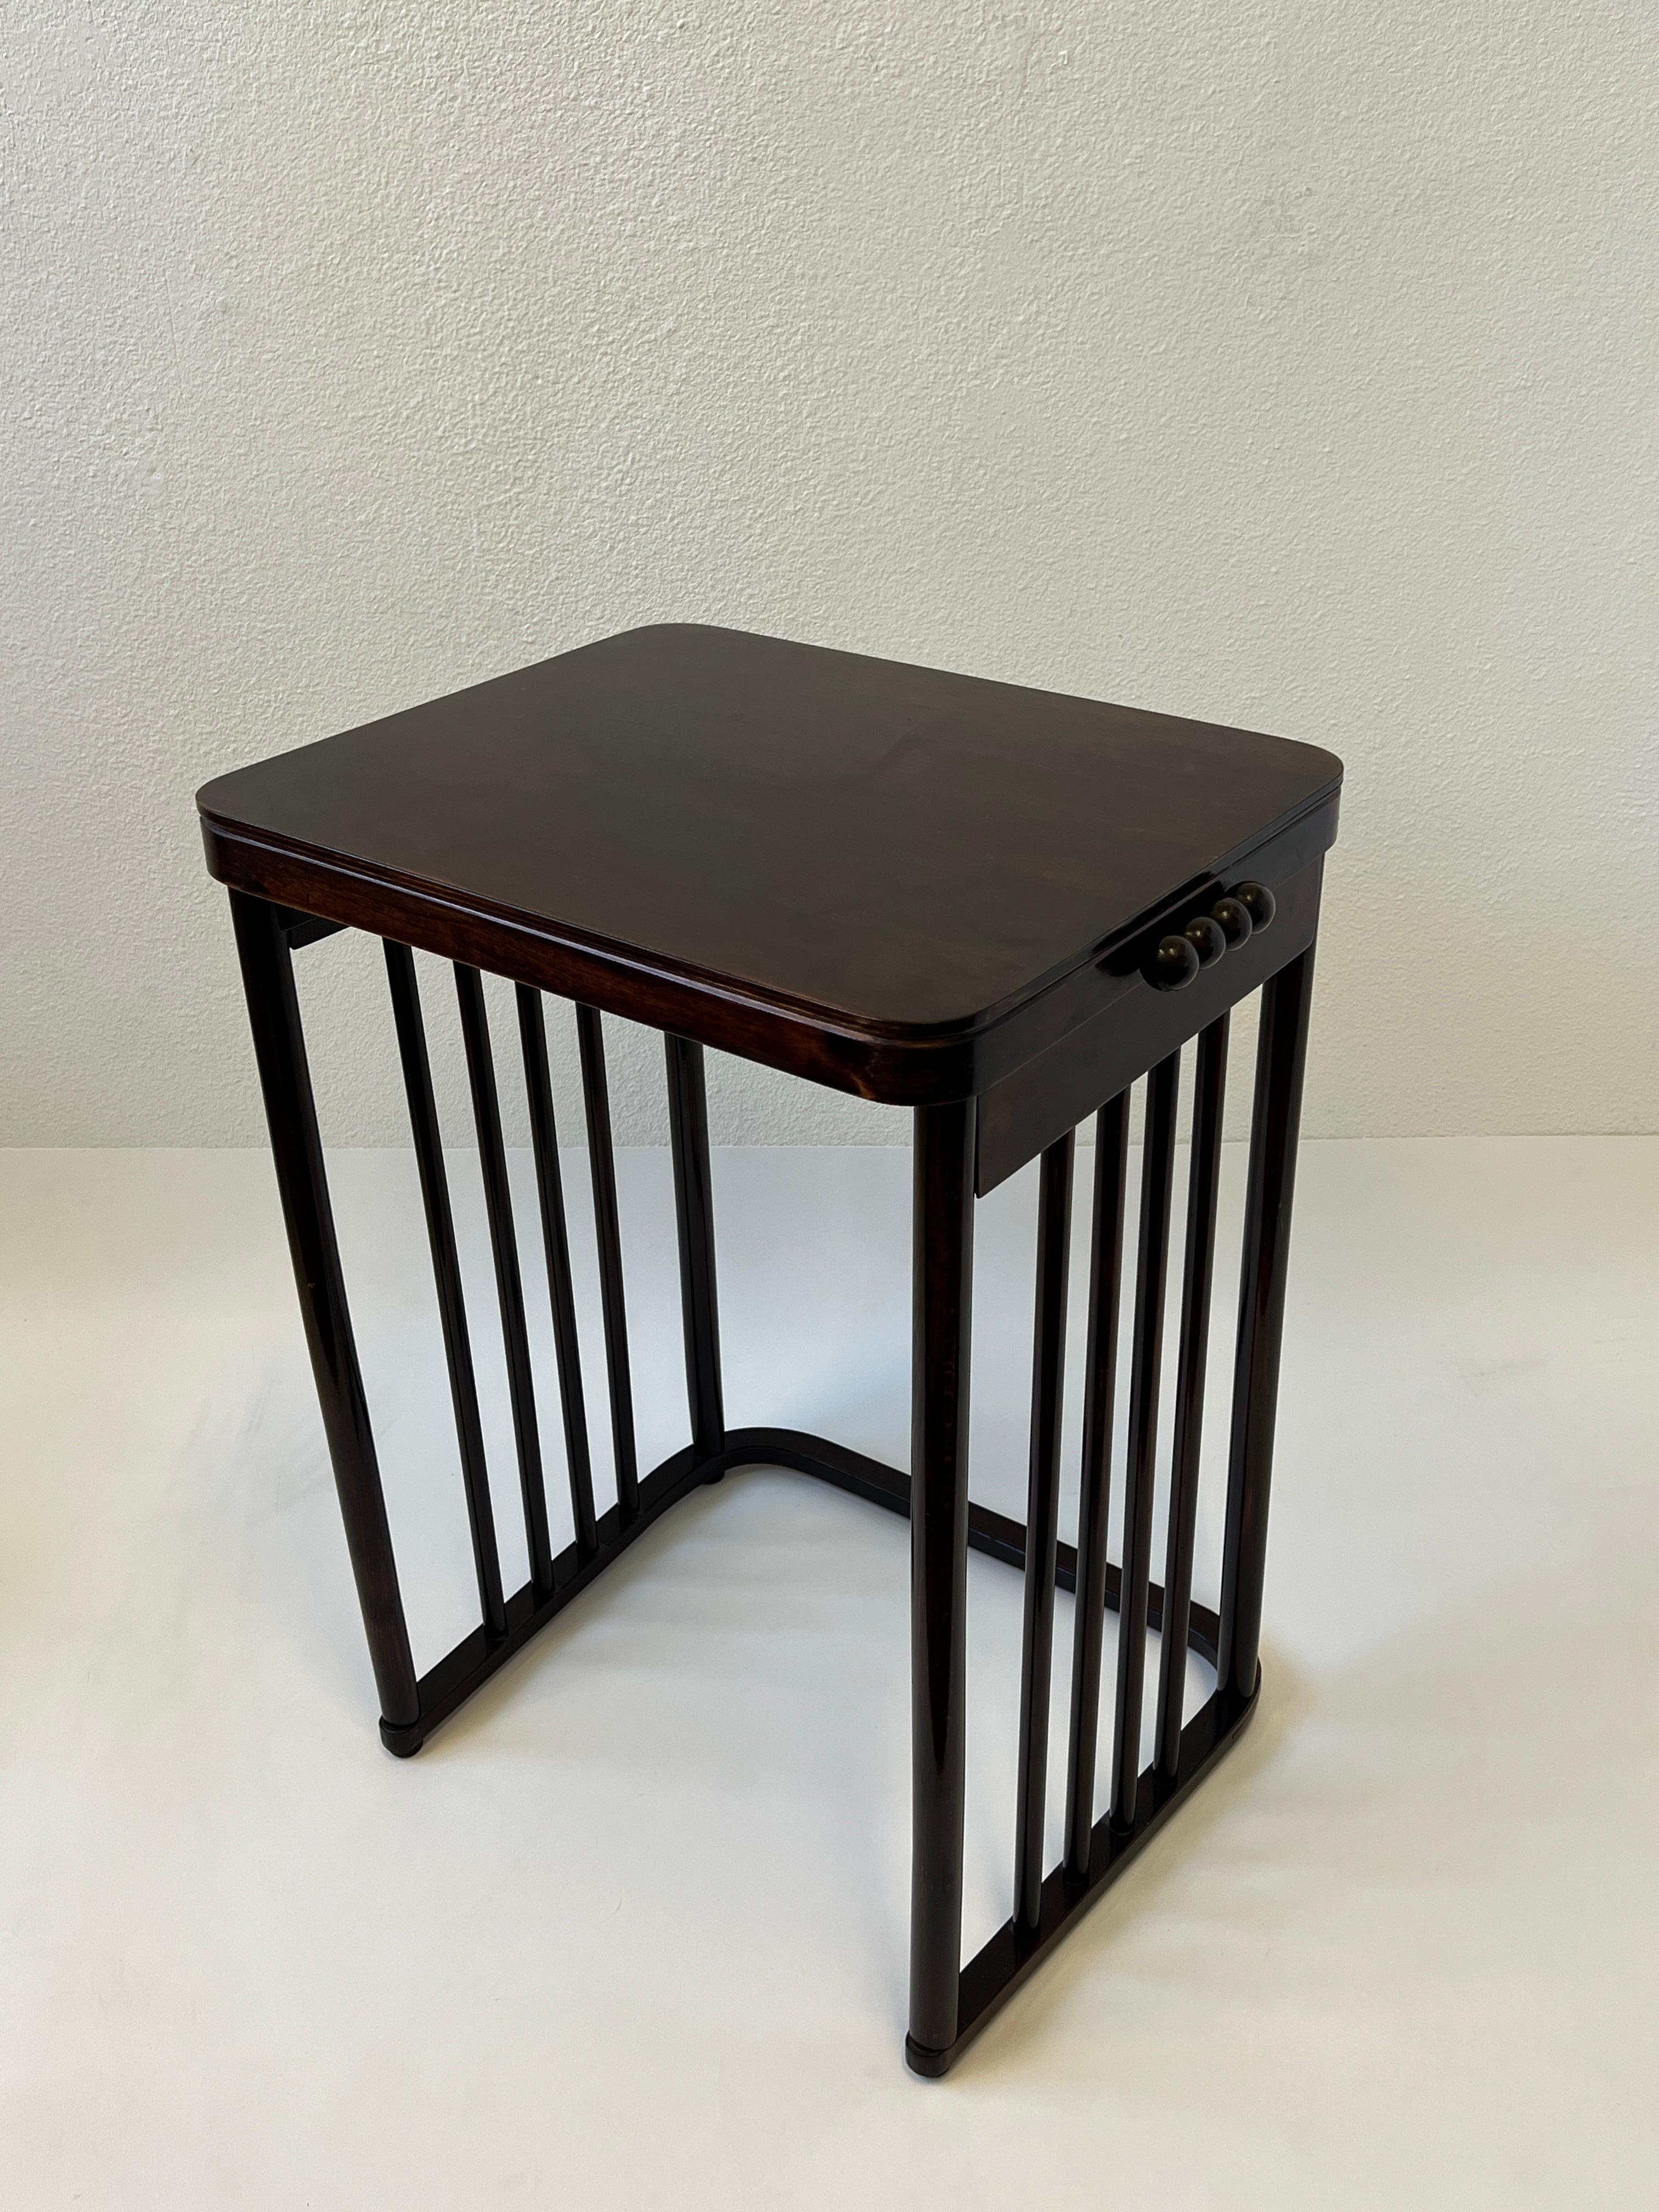 Dark Mahogany Art Nouveau Bentwood Side Table by Josef Hoffman 1